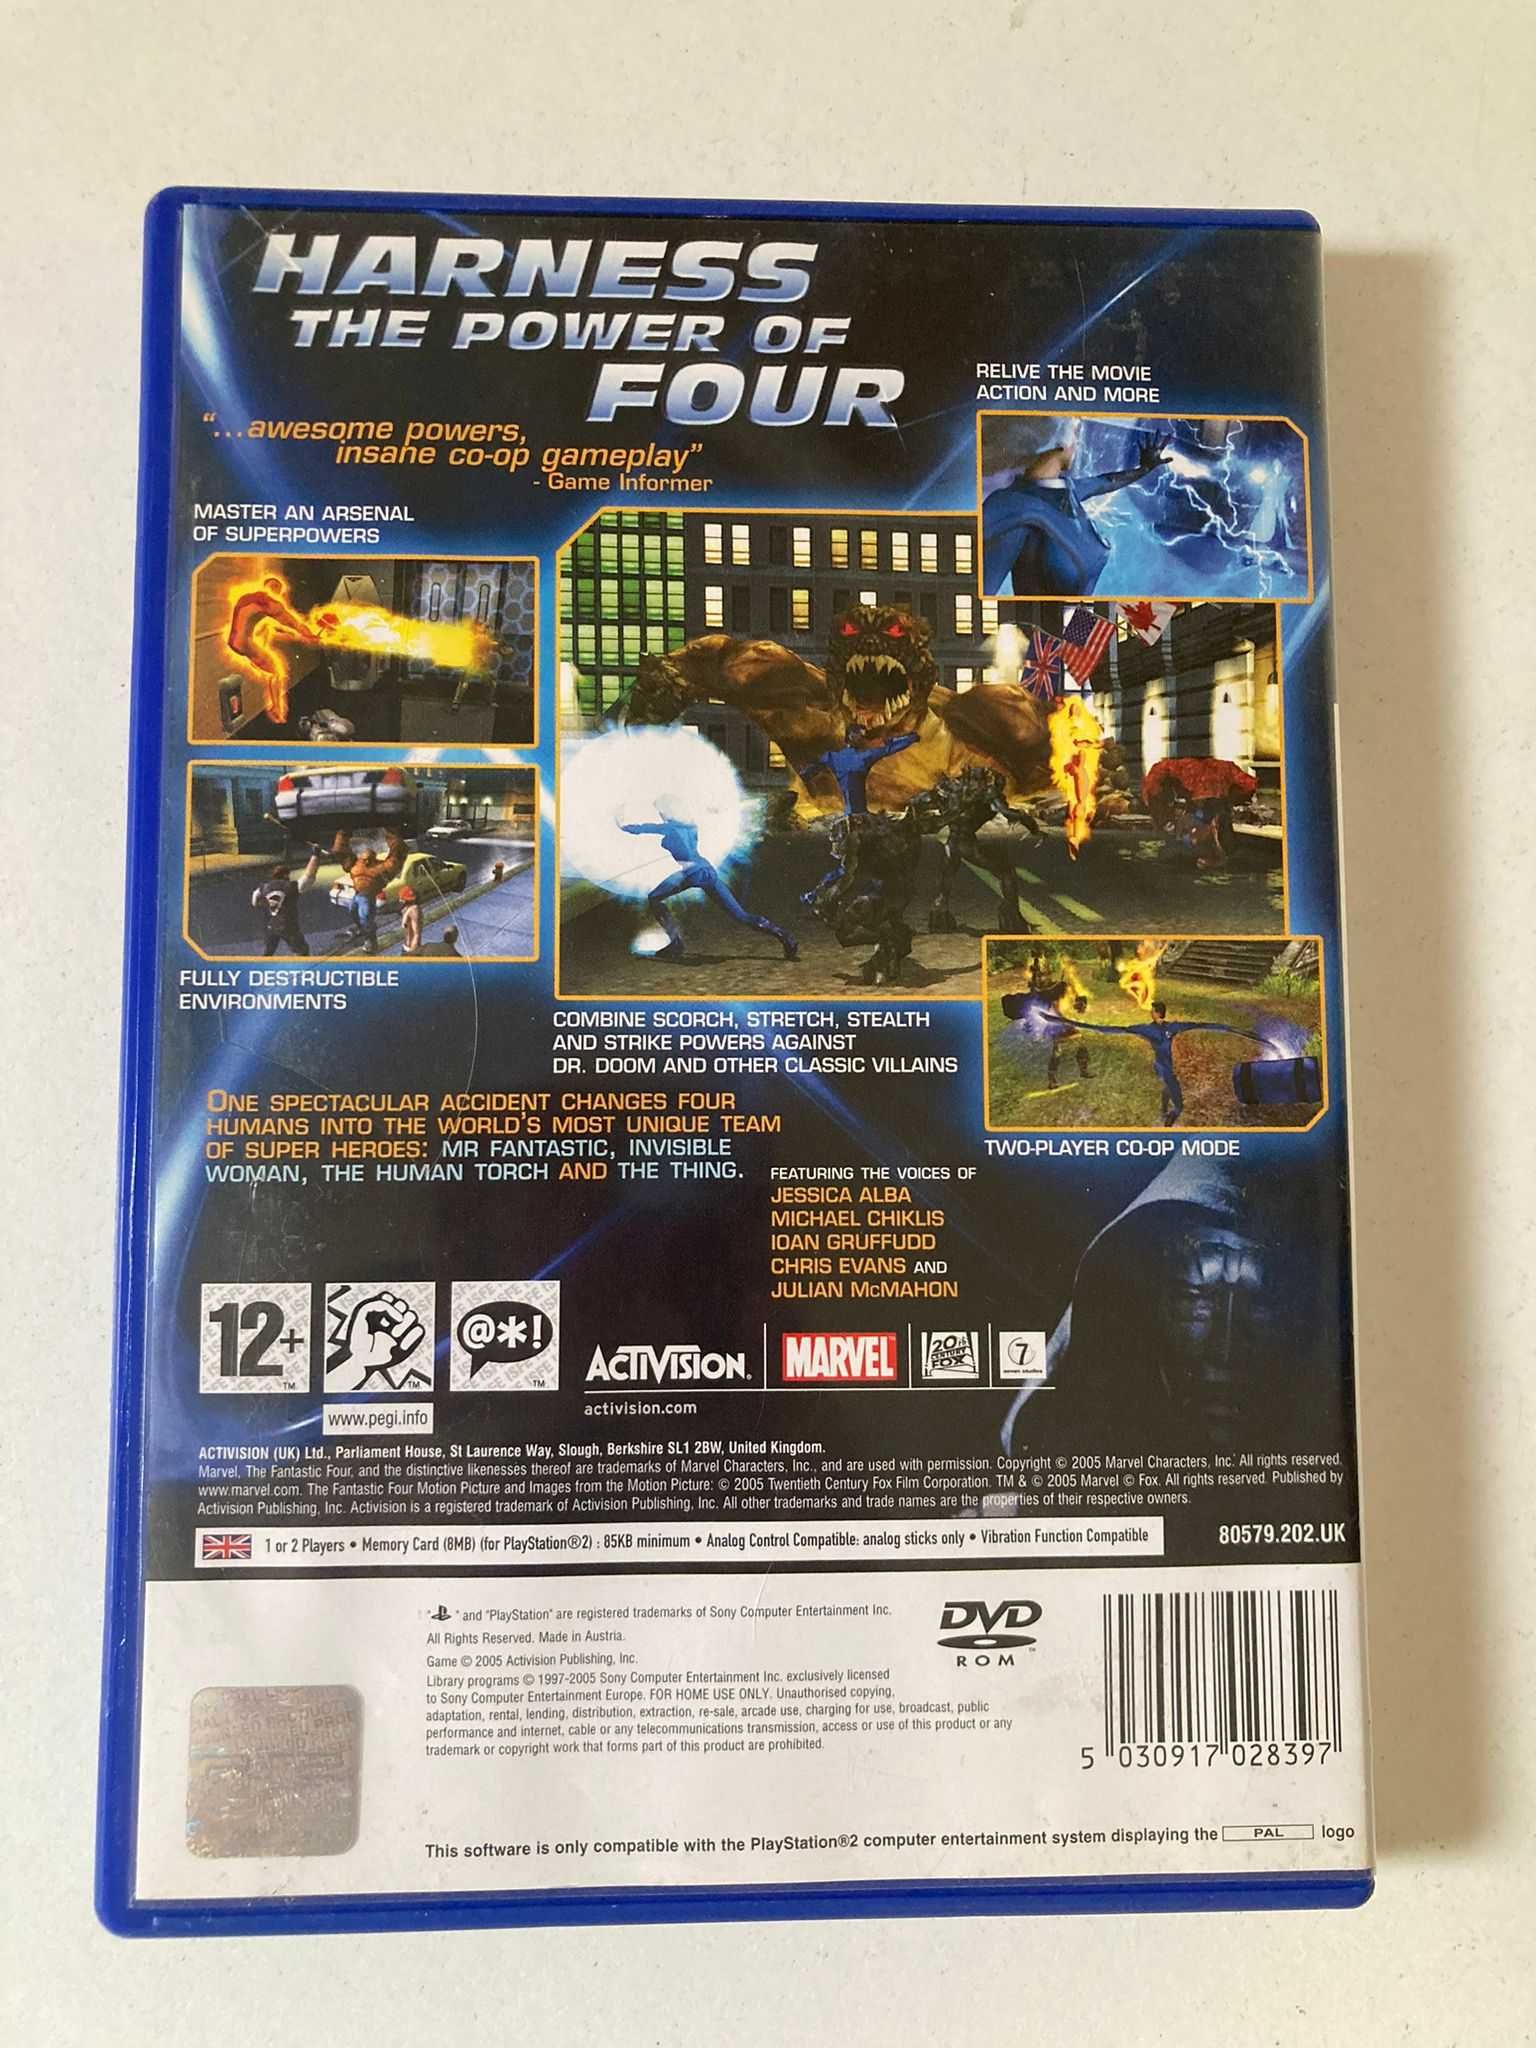 PS2 - Fantastic Four